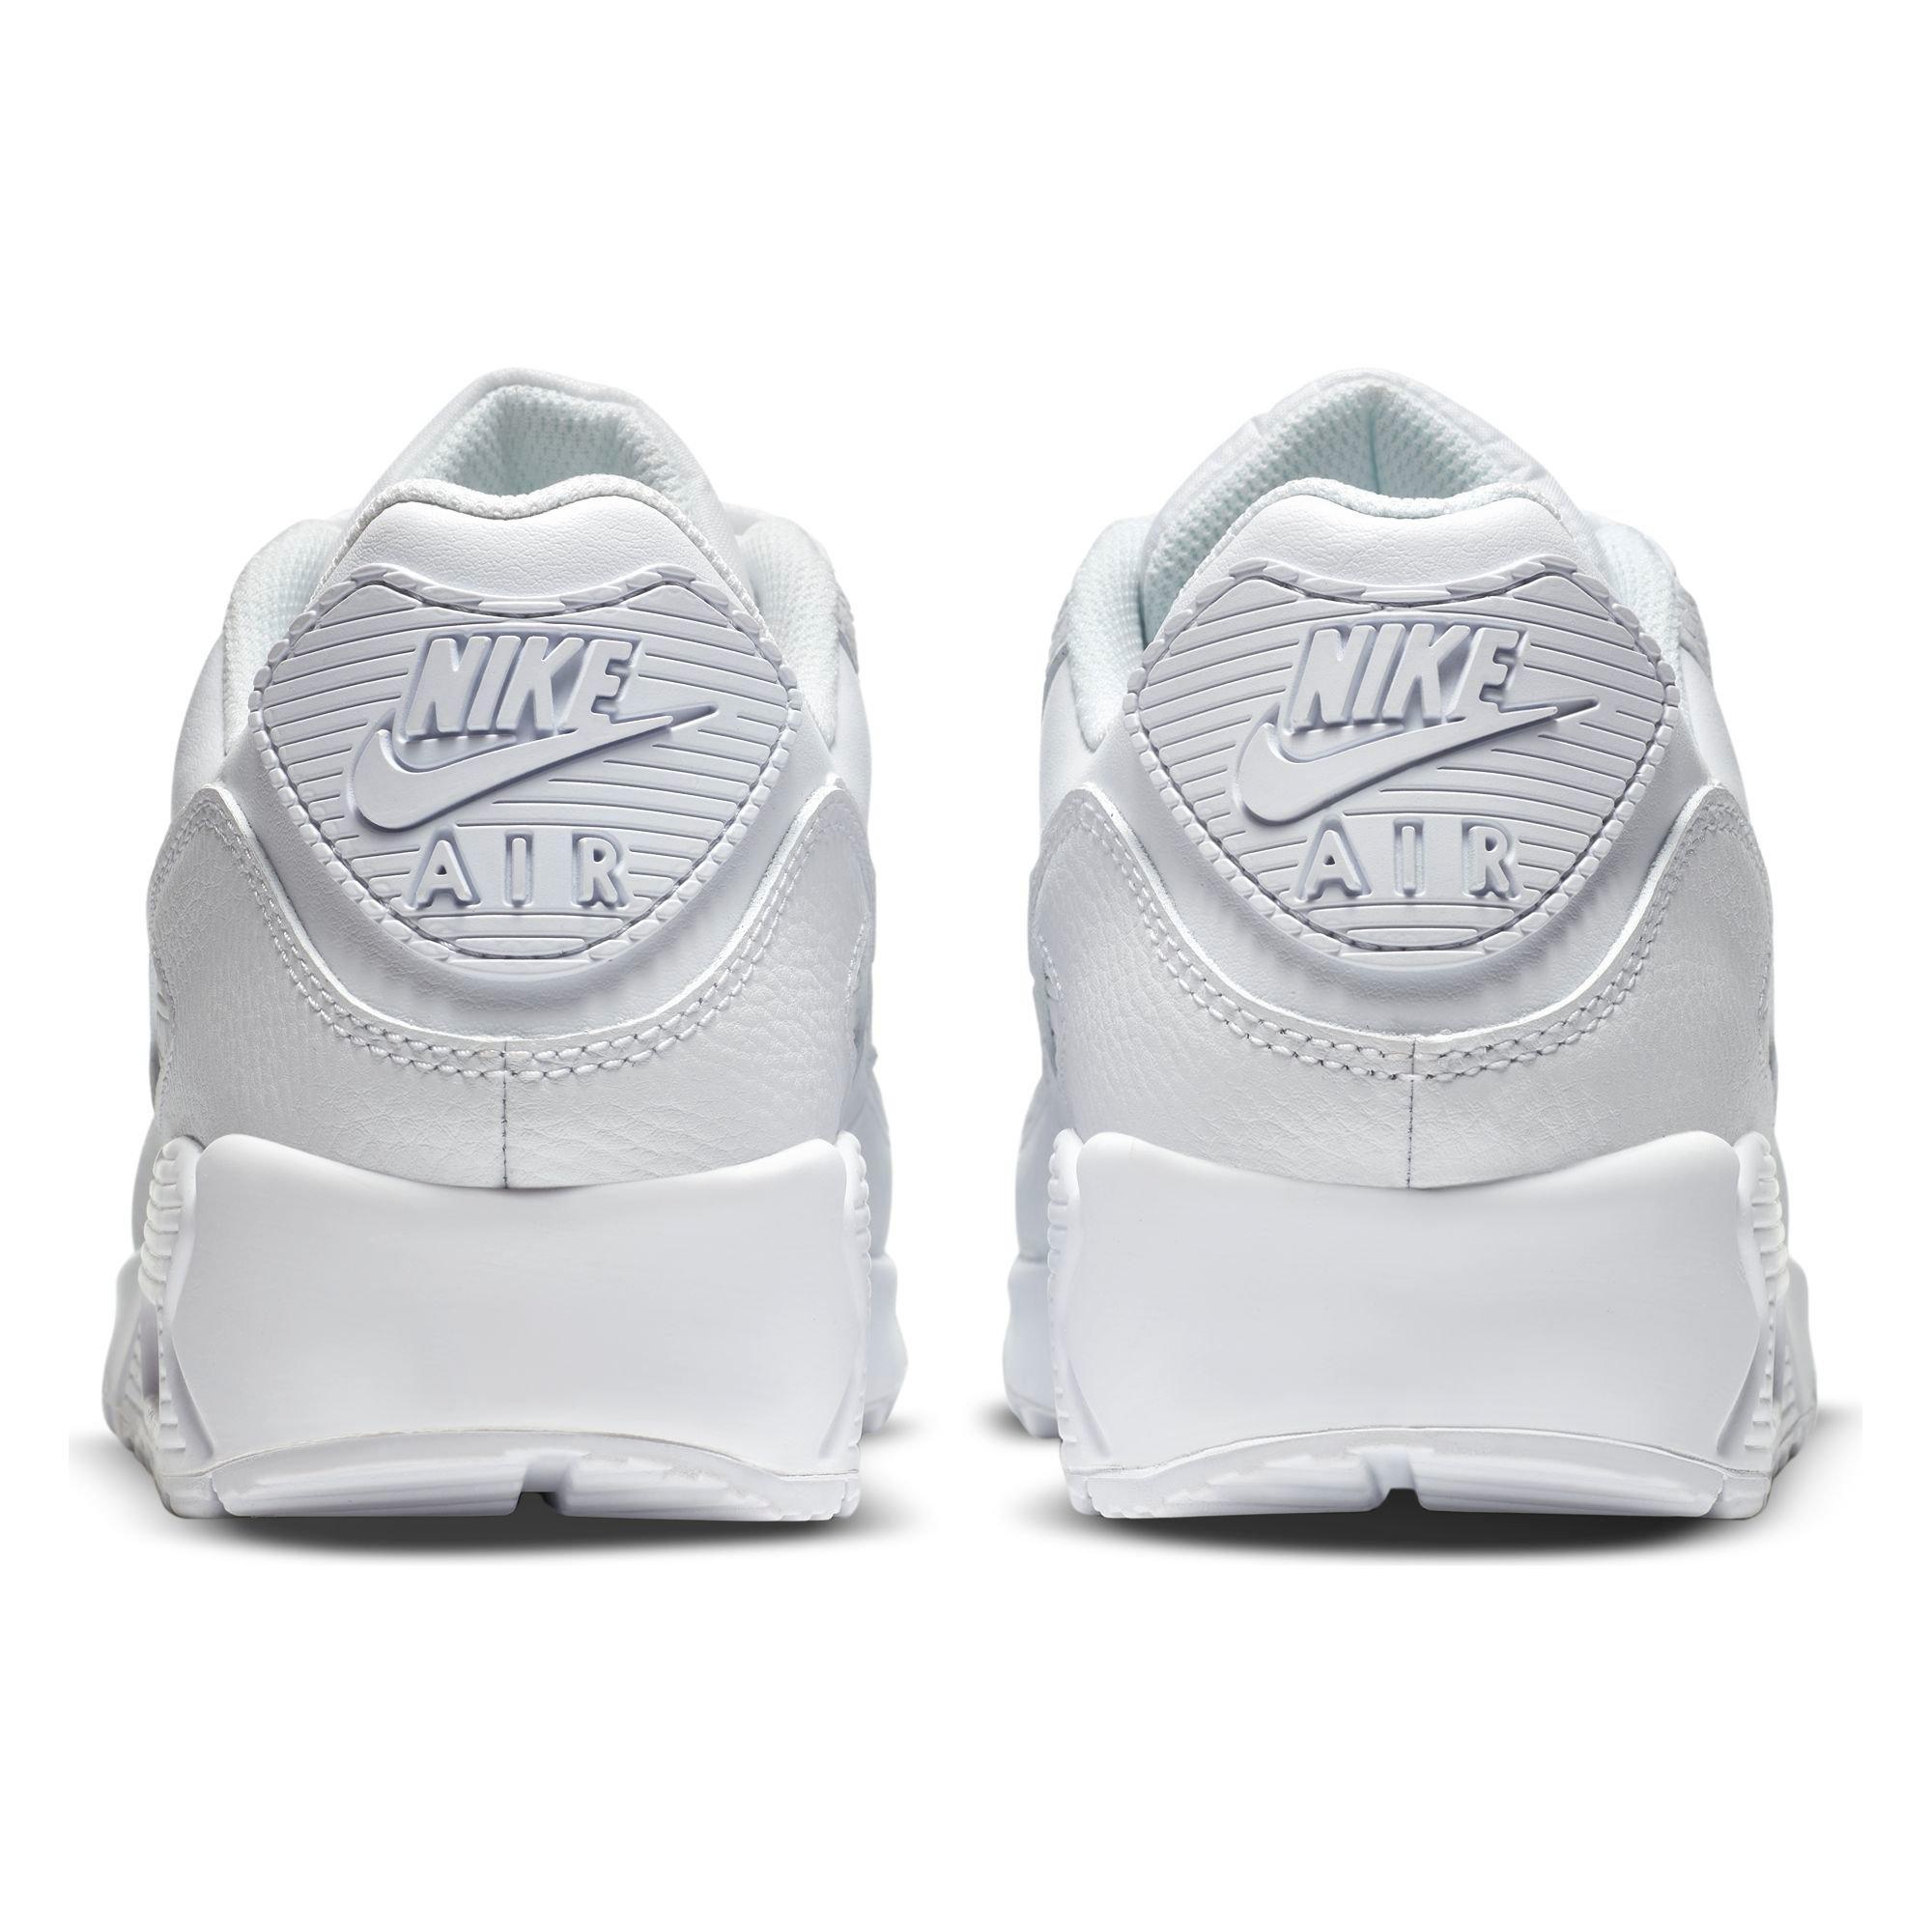 itself Oceania Becks Nike Air Max 90 Leather "White/White" Men's Shoe